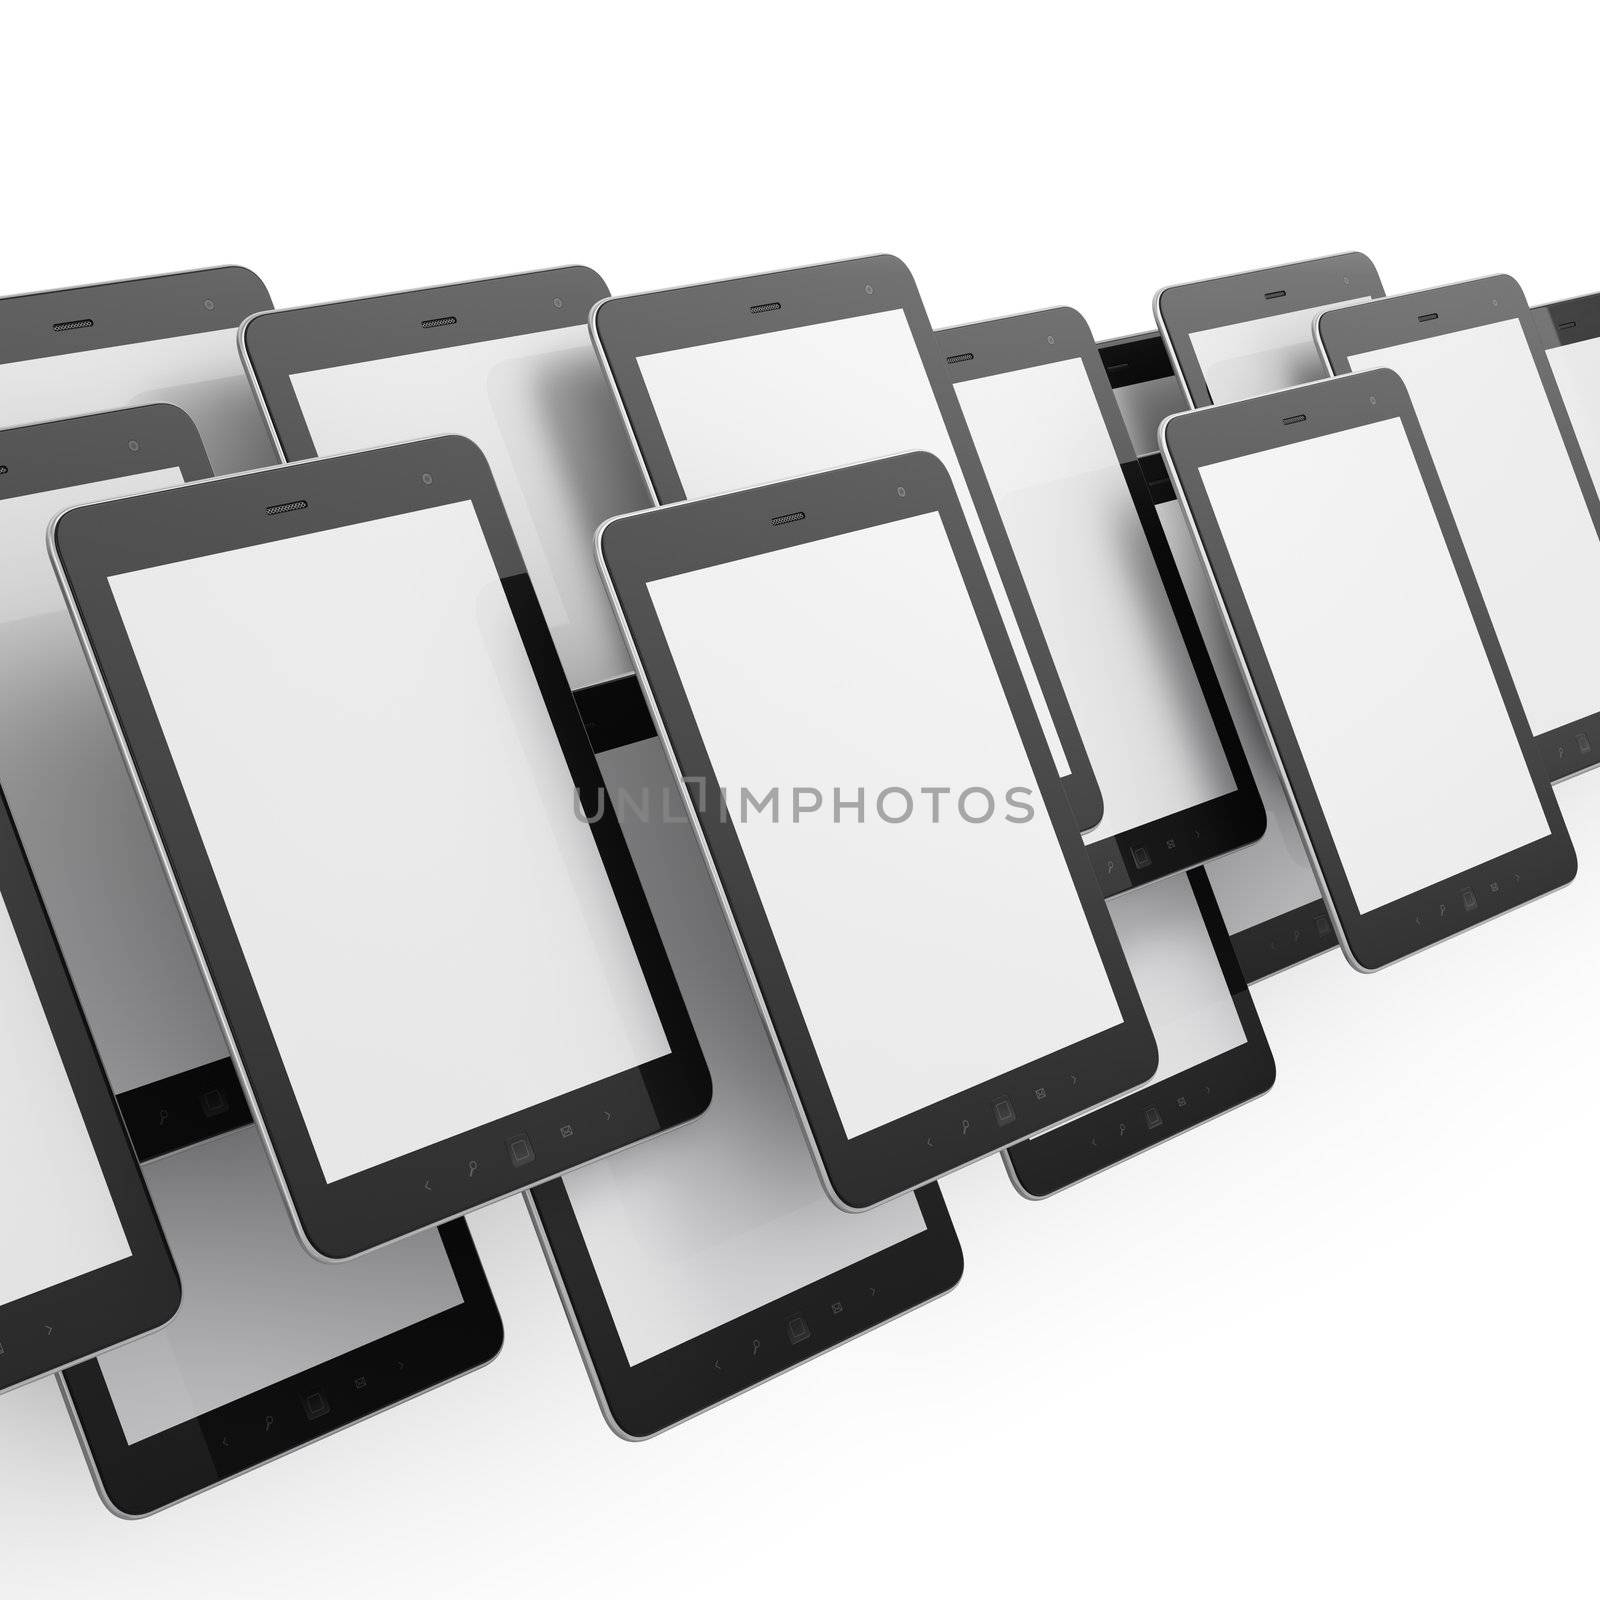 Black tablets on white background by maxkabakov